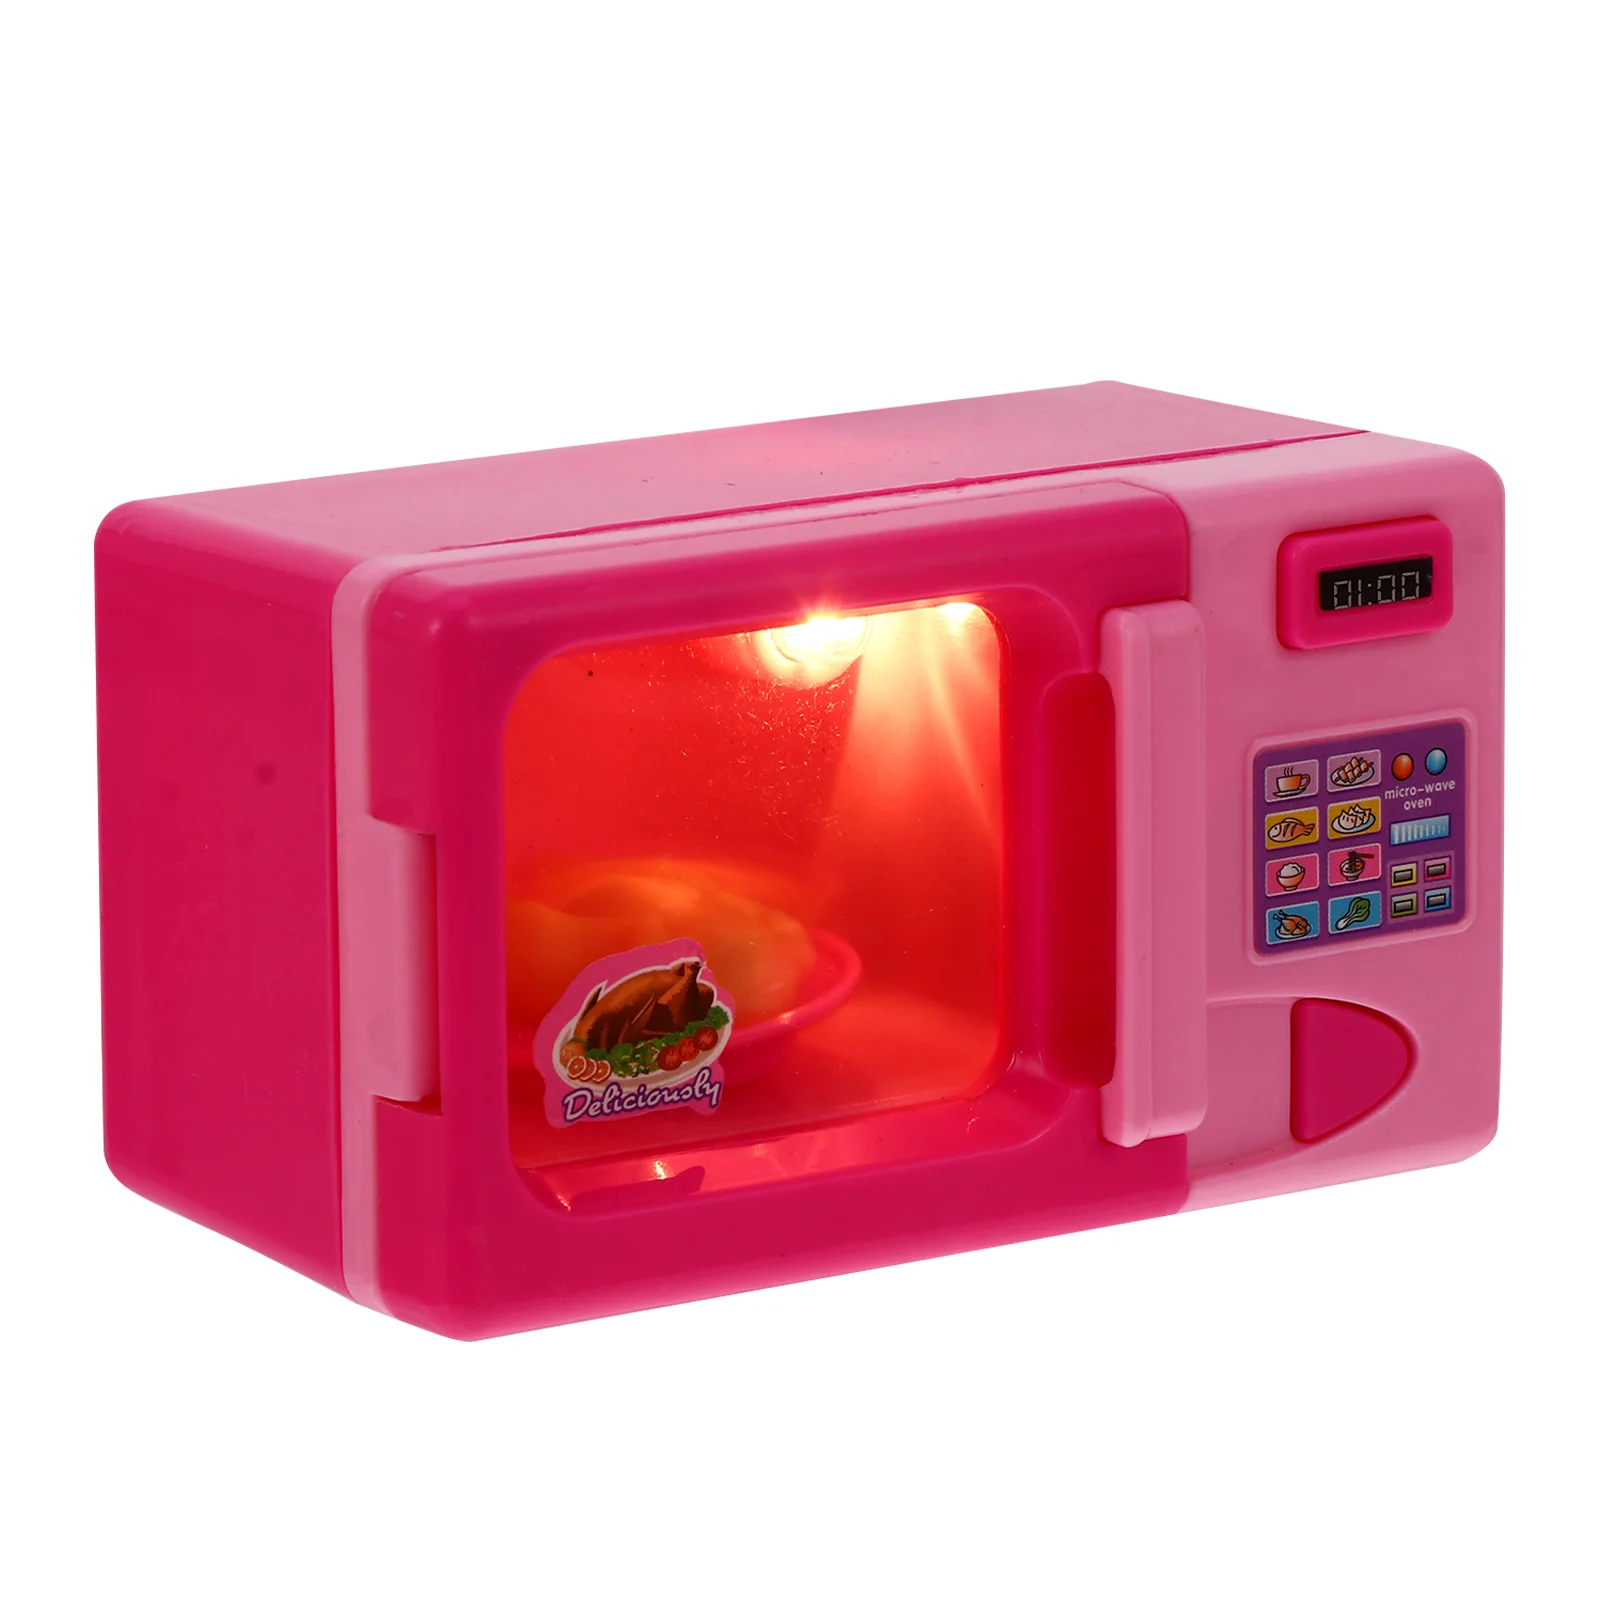 

Mini Toys Kids Simulation Miniature Decor Furniture 11.5X6.3CM Microwave Oven Model Pink Plastic Toddler